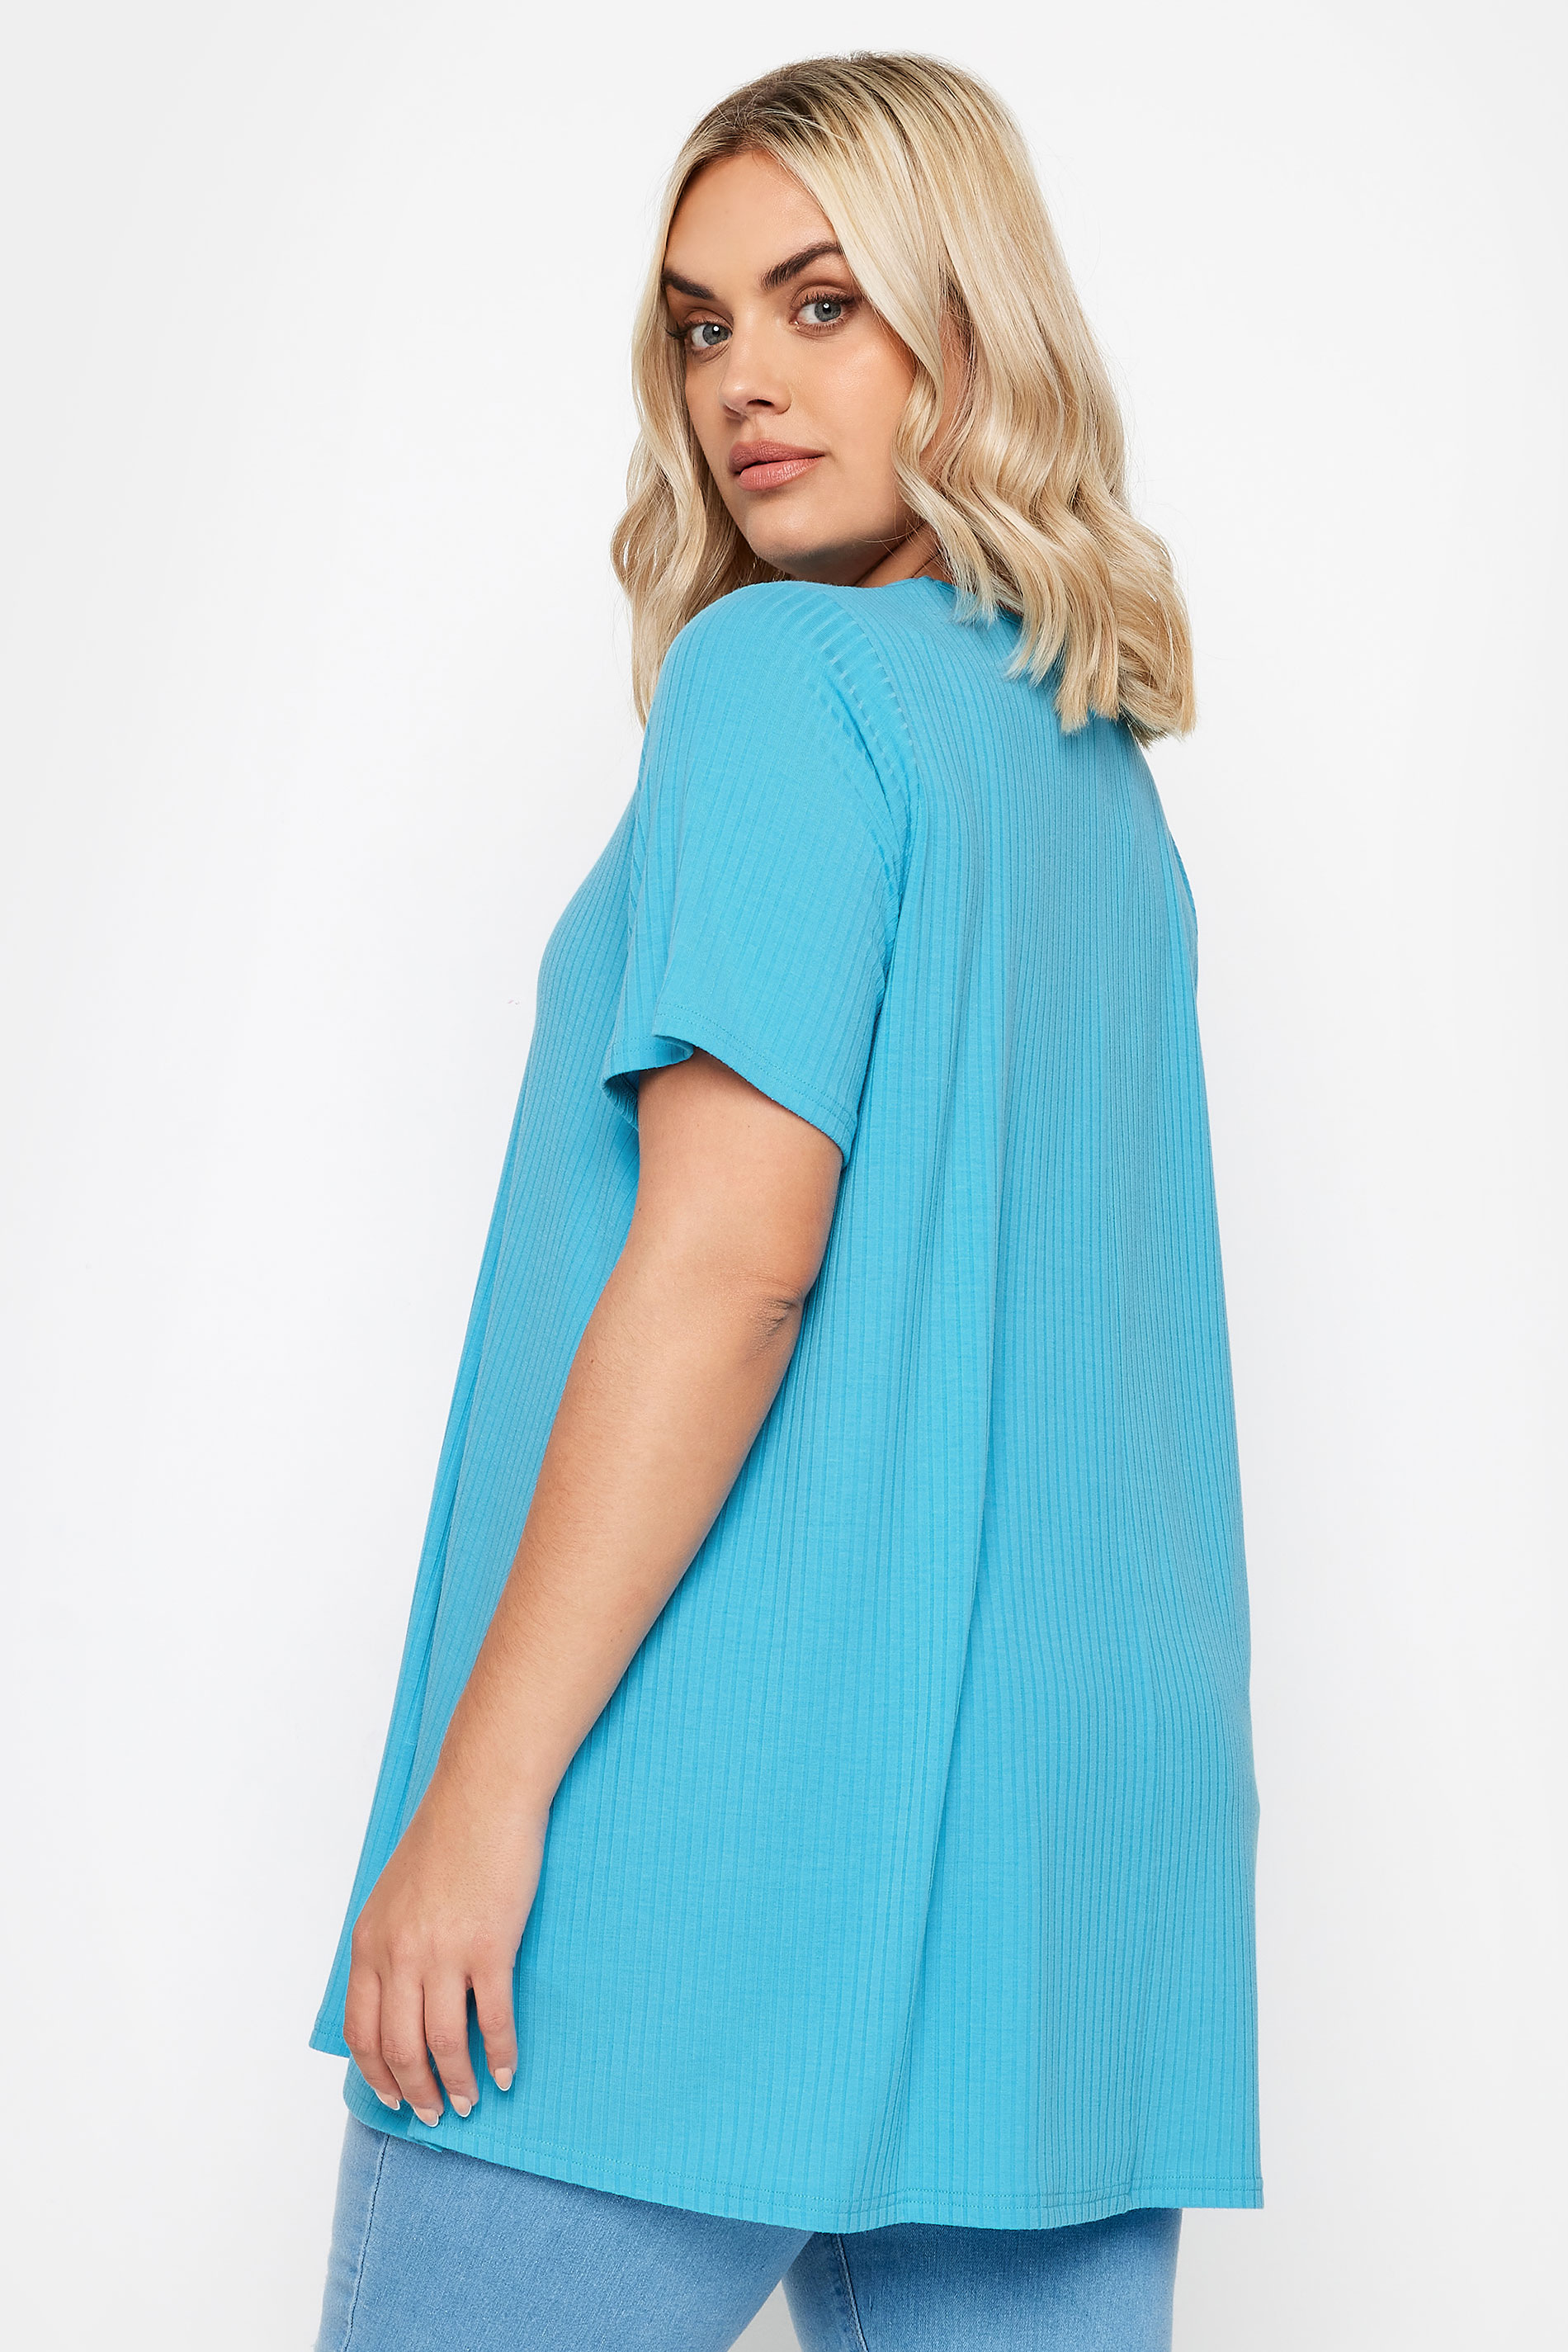 YOURS Plus Size Aqua Blue Swing T-Shirt | Yours Clothing 3